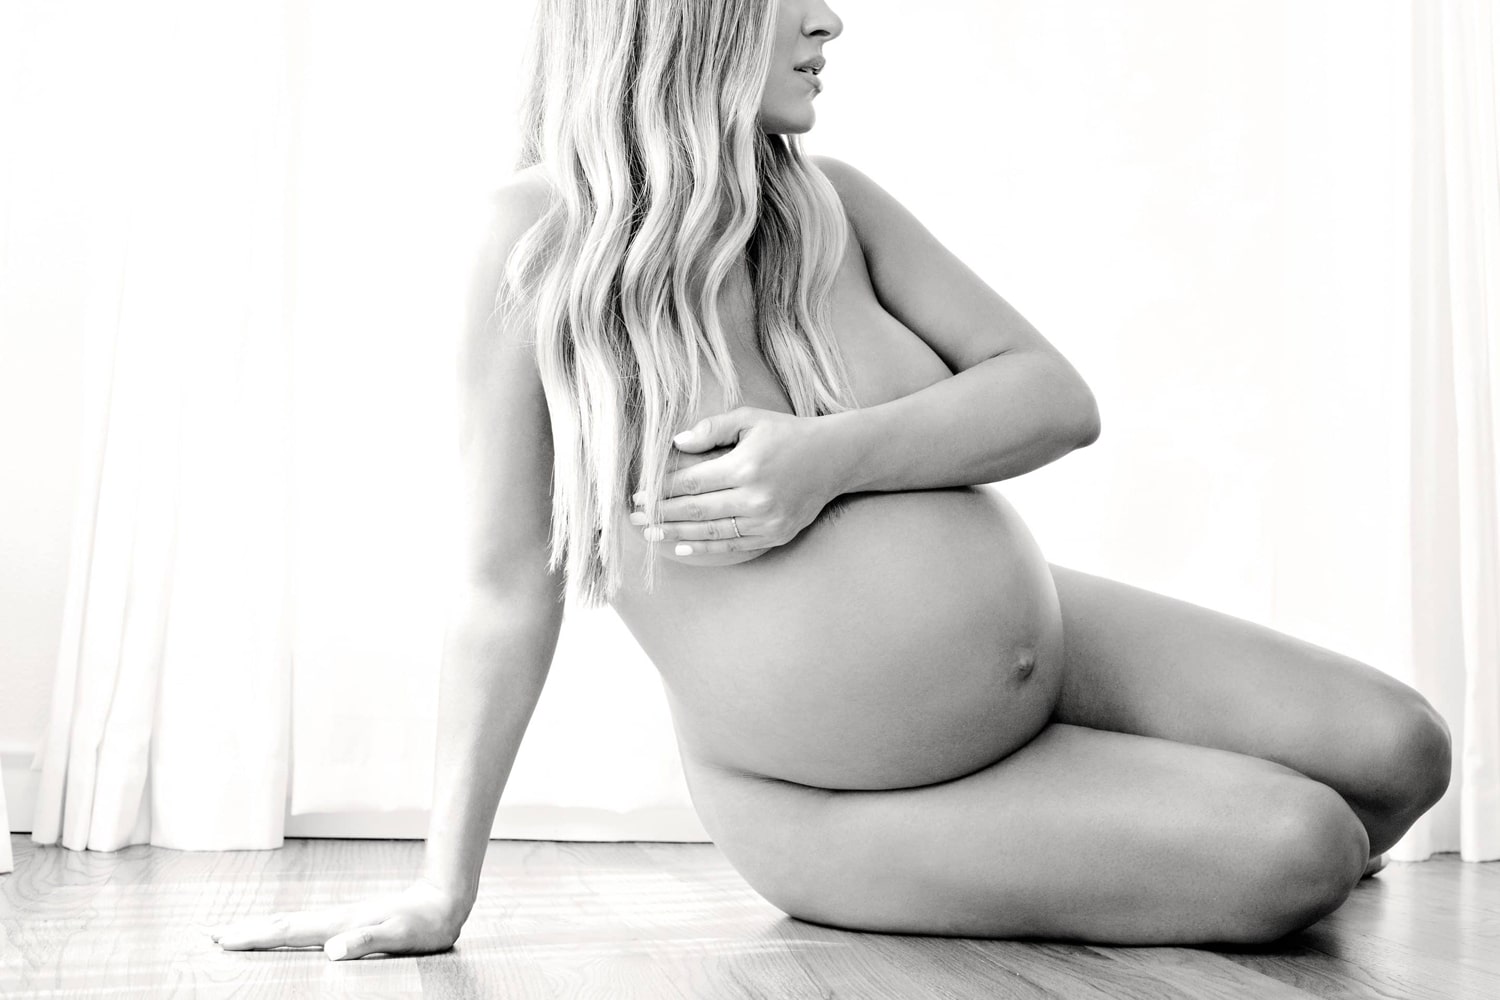 A pregnant woman takes maternity photos.